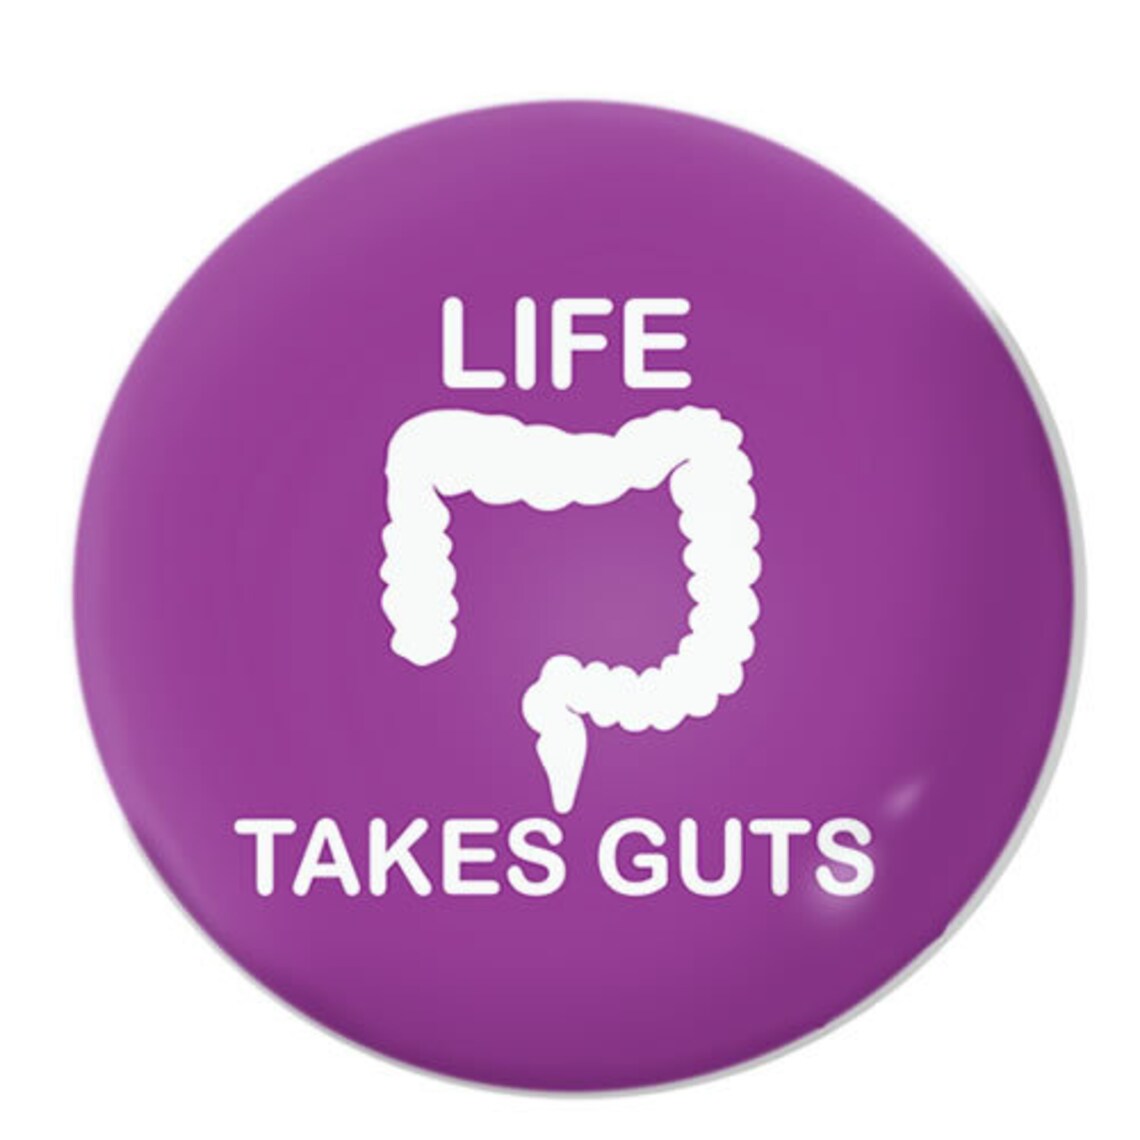 Crohns Disease Awareness 25mm 1 Inch Pin Button Badge Etsy Uk